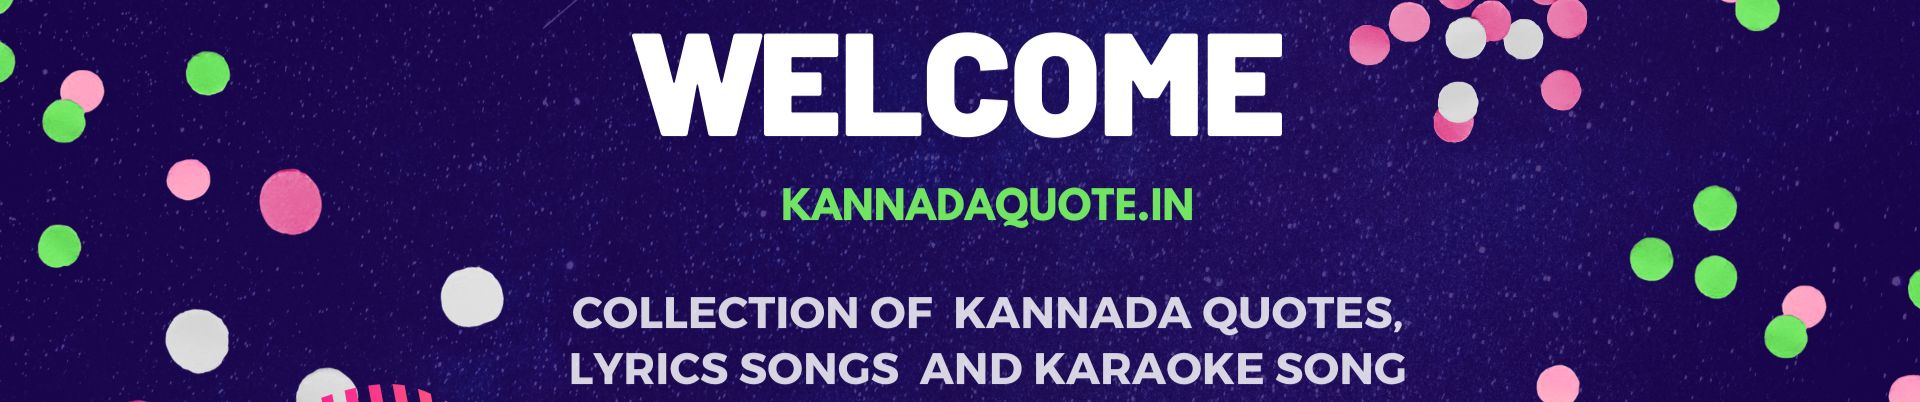 Lingashtakam By Spb Song Karaoke By Kannadaquote In Brahma murari surarchita lingam( lingastakam ) best status for whatsapp mp3 duration 3:44.jenmam nirainthathu (ஜென்மம் நிறைந்தது) with lyrics in tamil mp3 duration 5:03 size 11.56 mb.music brahma murari surarchita lingam 100% free! soundcloud